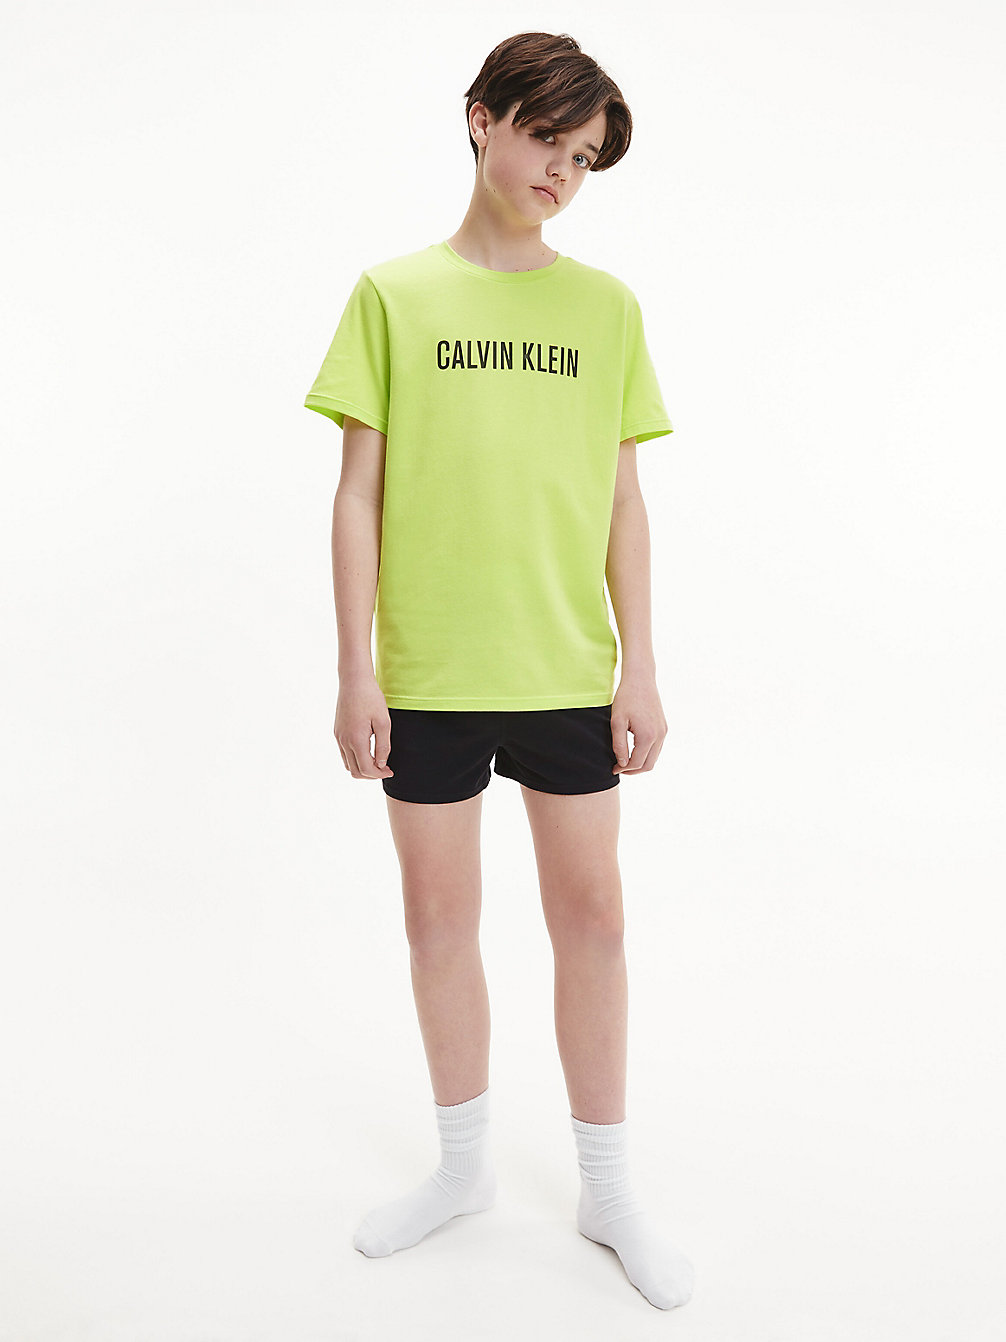 SOURLIME/W/PVHBLACK Shorts Pyjama Set - Intense Power undefined boys Calvin Klein